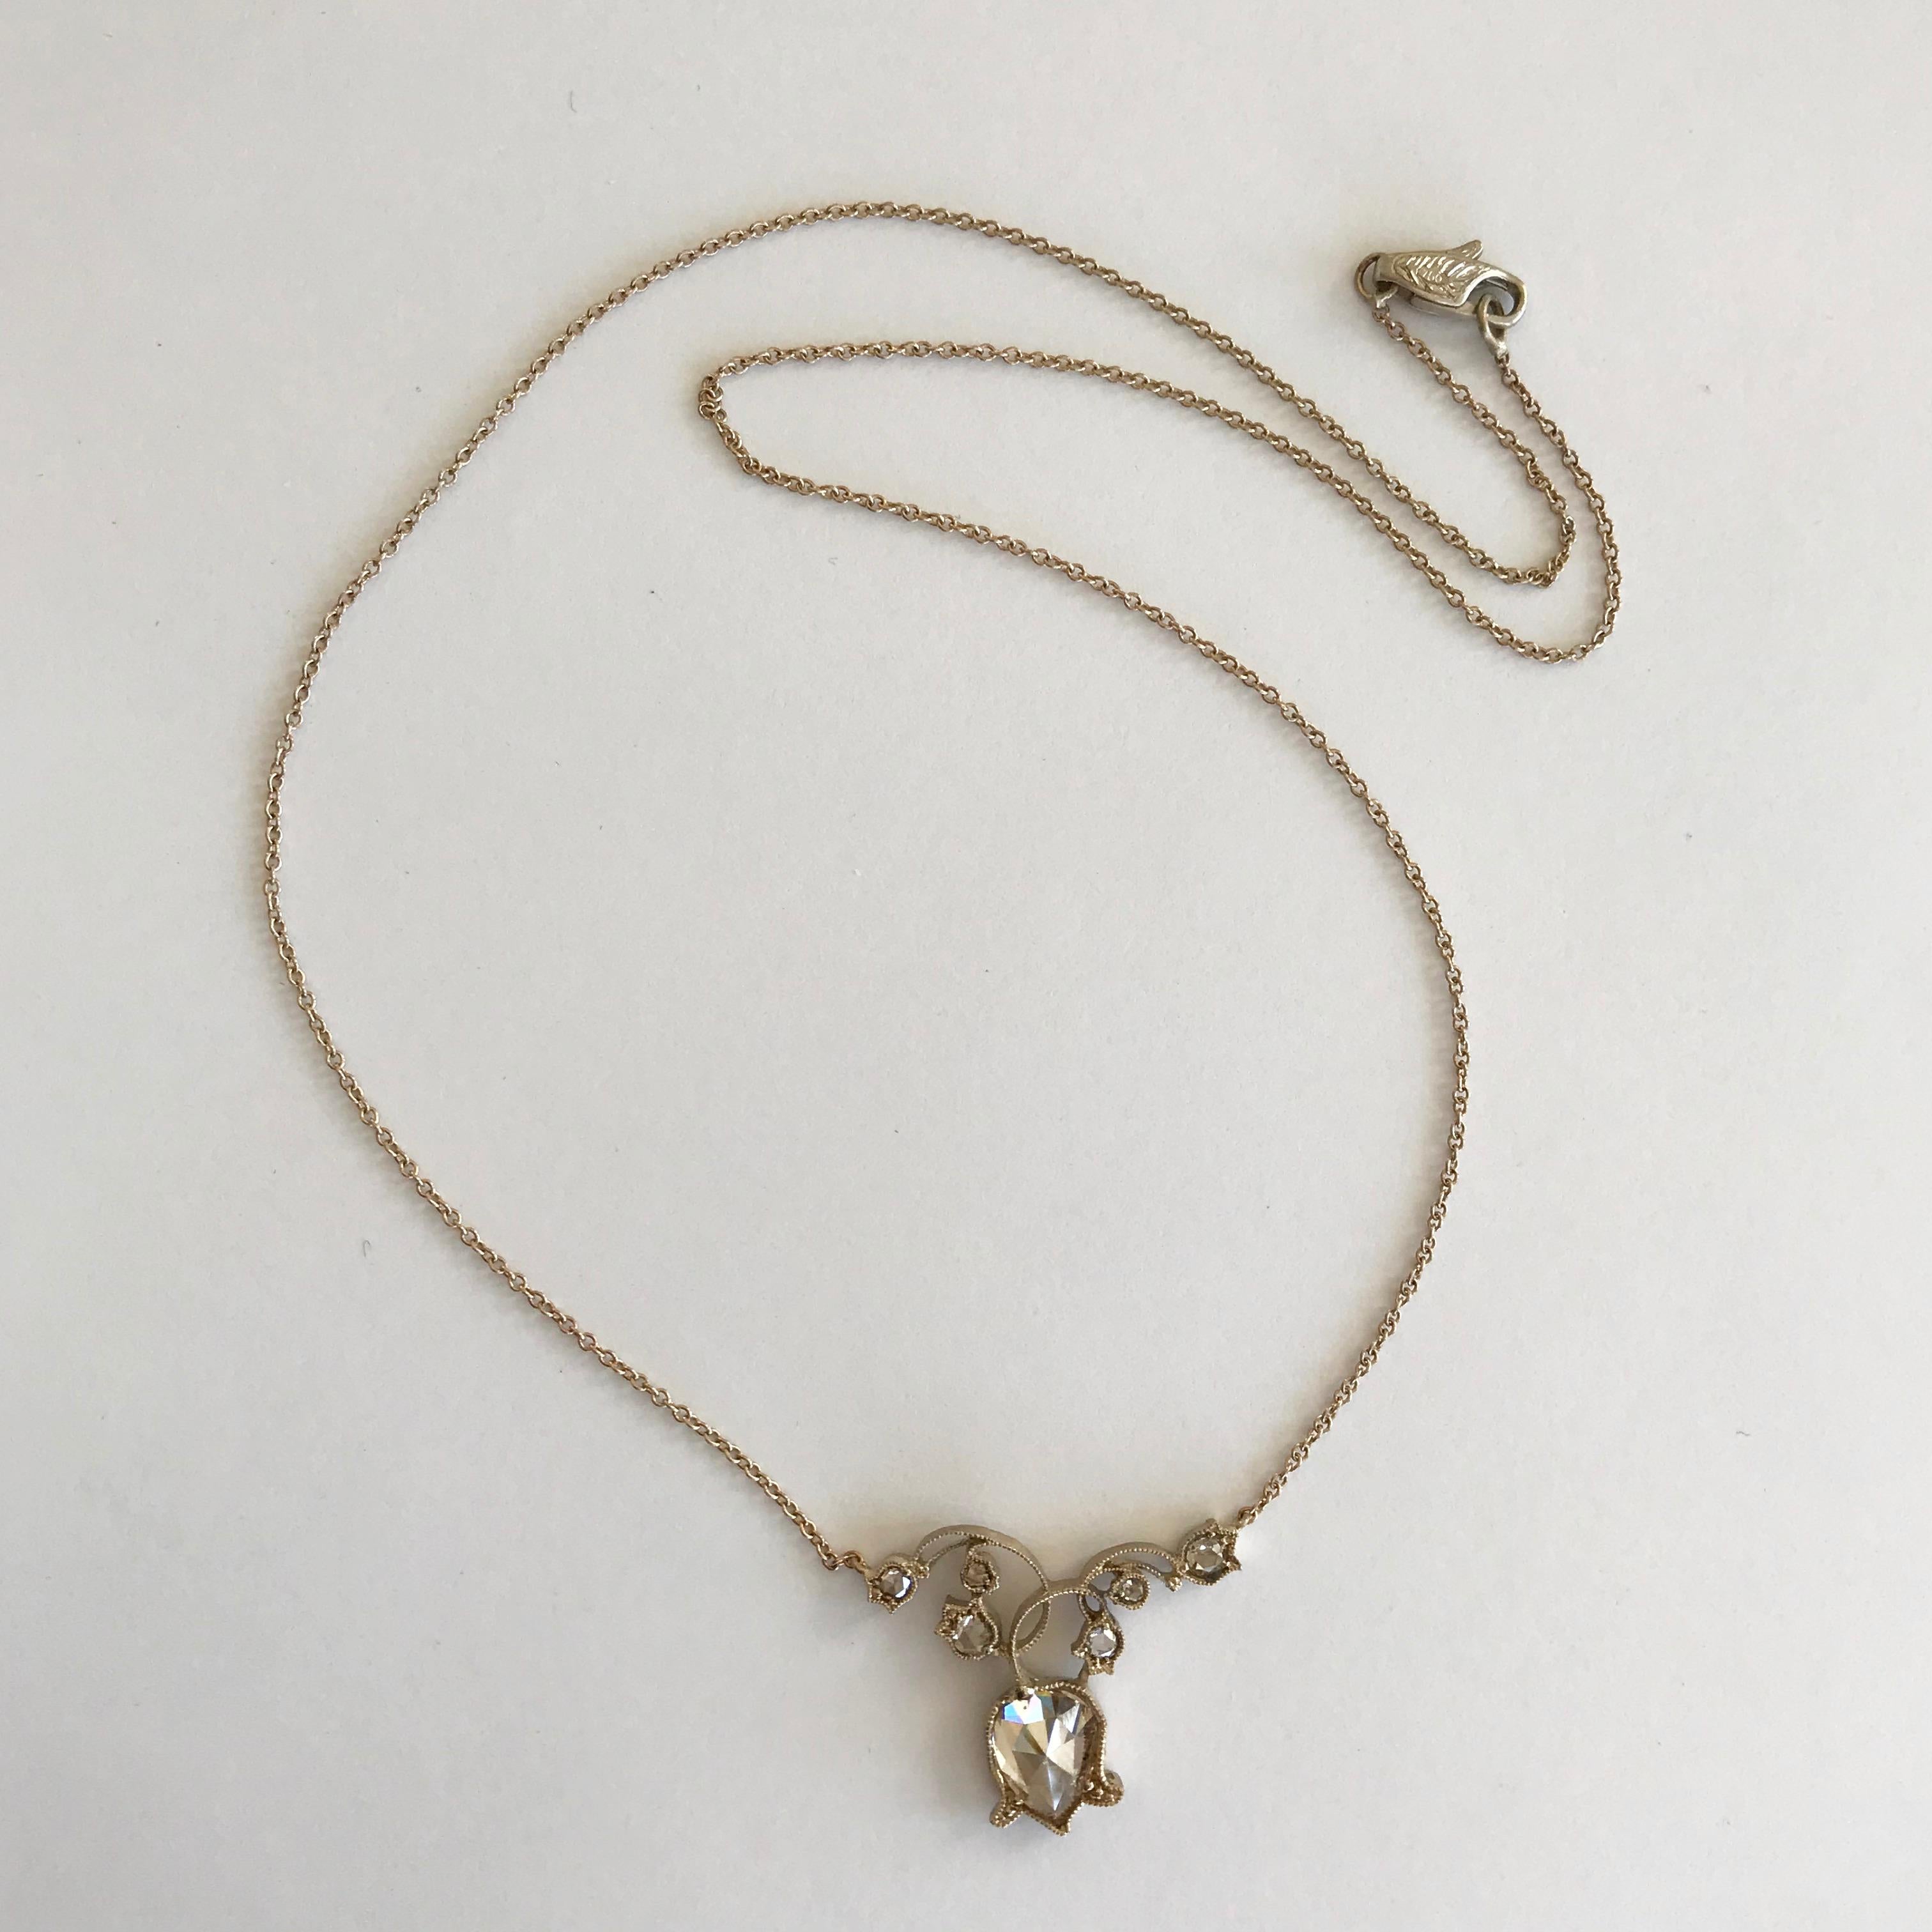 Dalben 1.5 Carat Pear Shape Diamond White Gold Necklace In New Condition For Sale In Como, IT